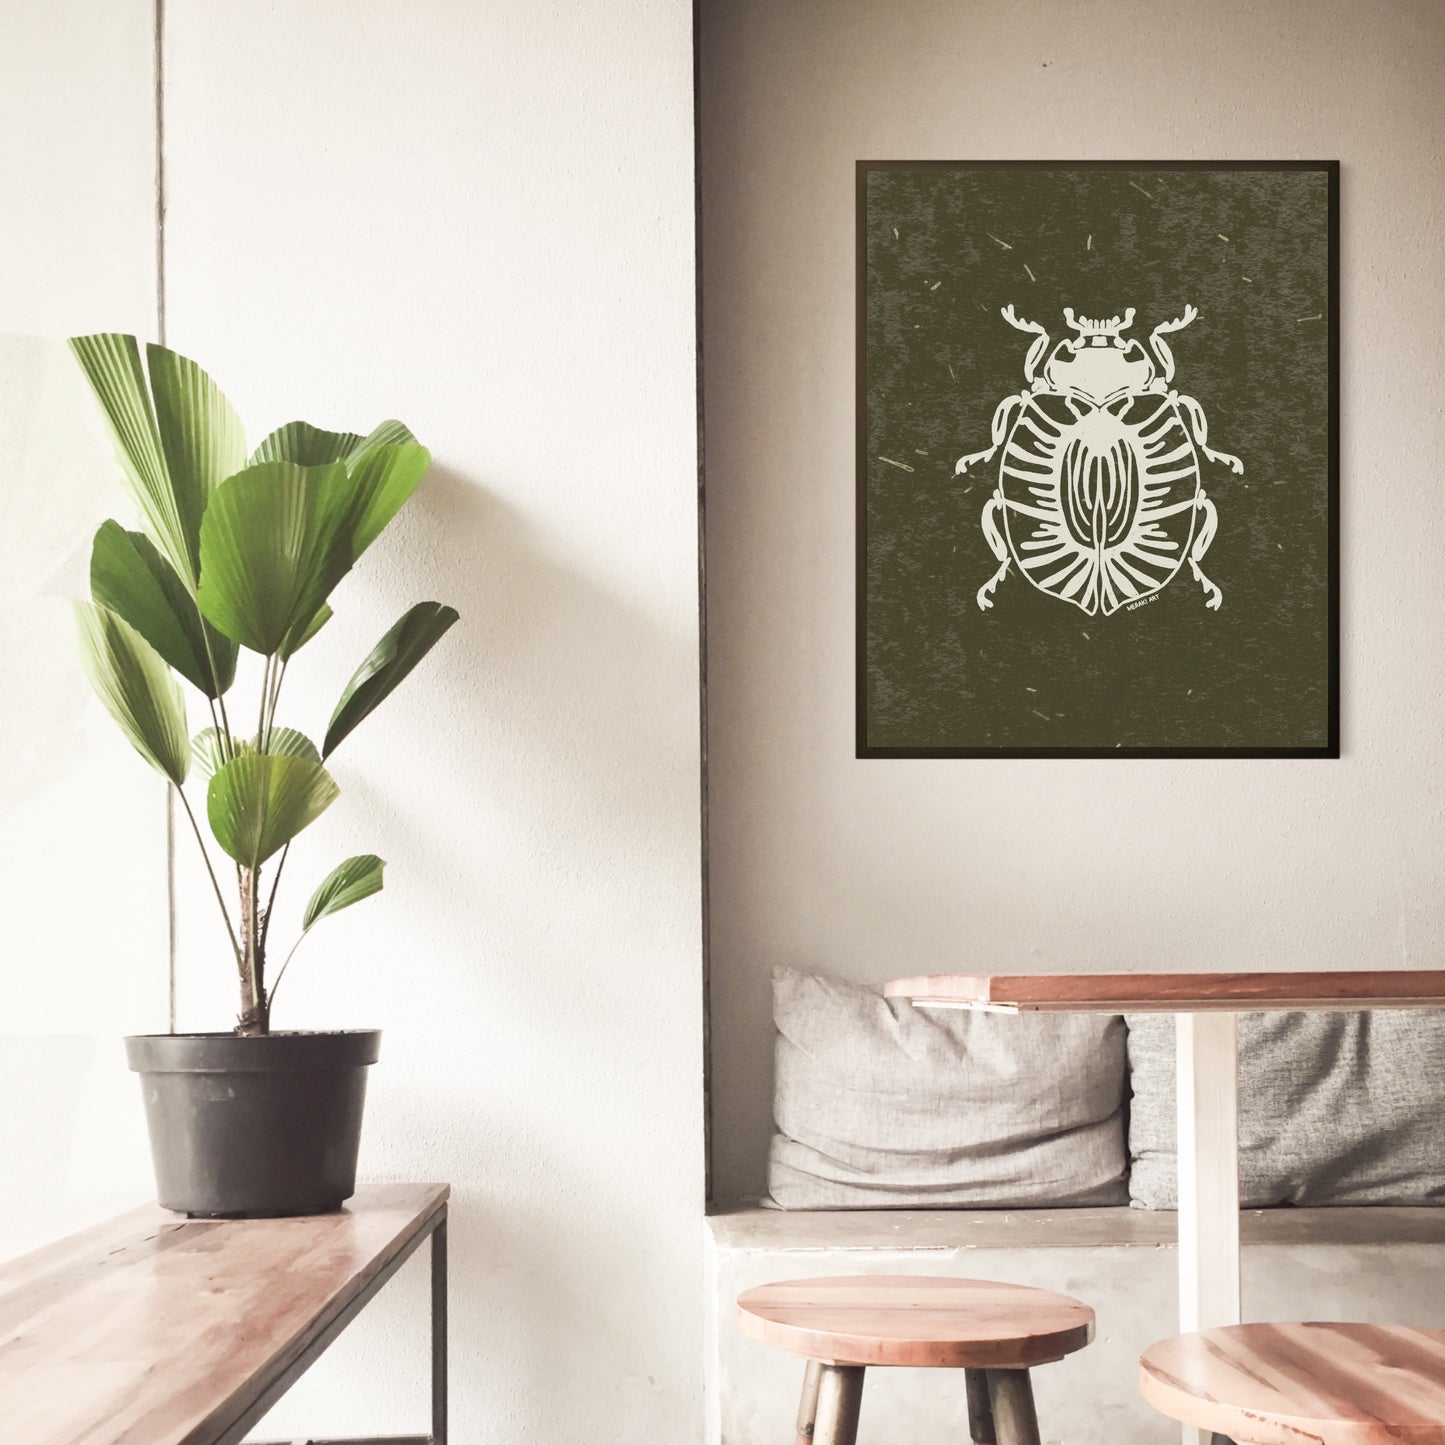 Beetle - Digital art print